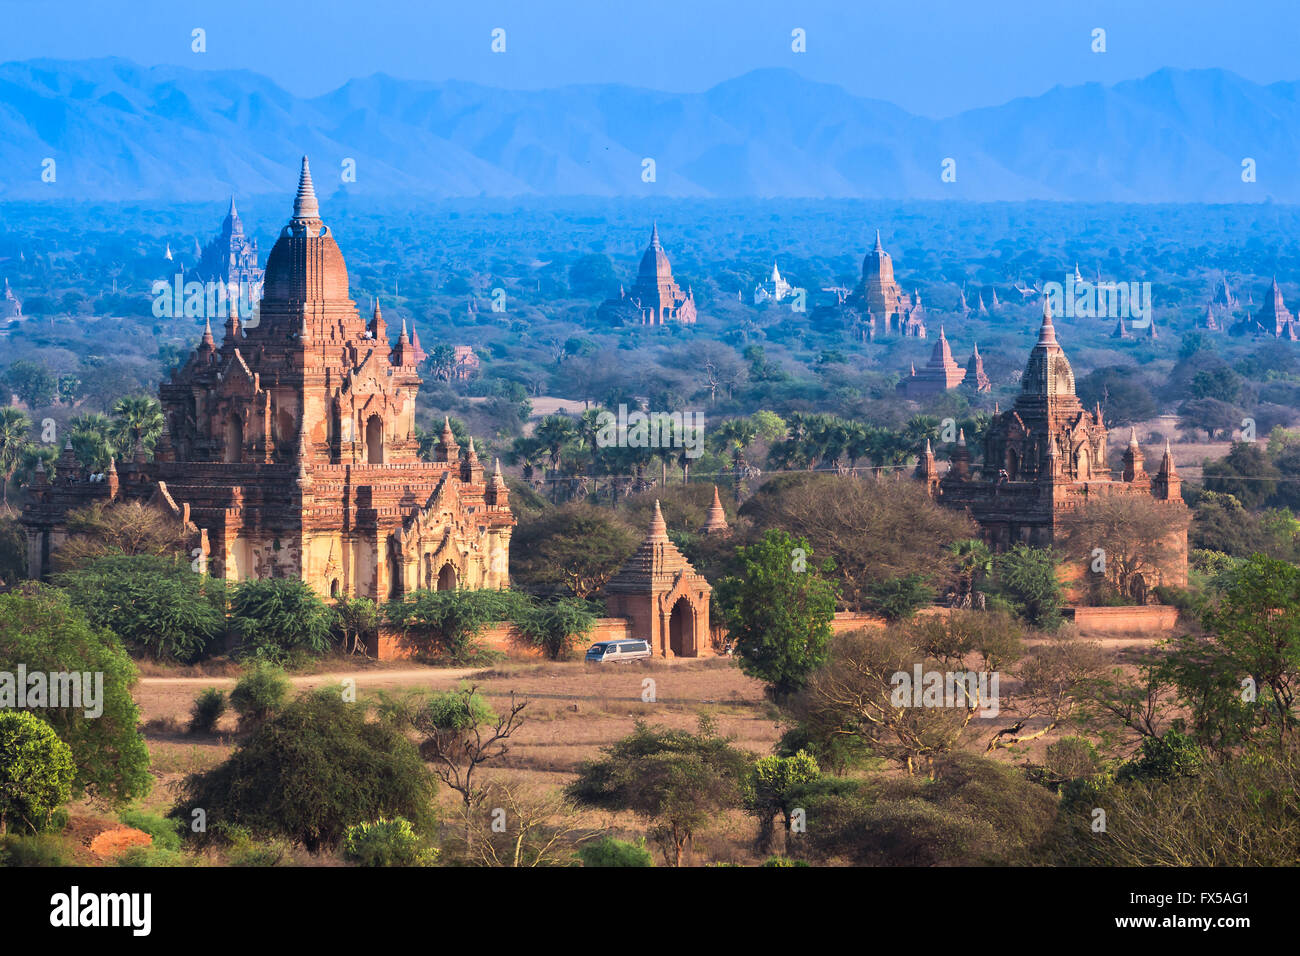 Temples de Bagan, terre de pagode, Myanmar Banque D'Images